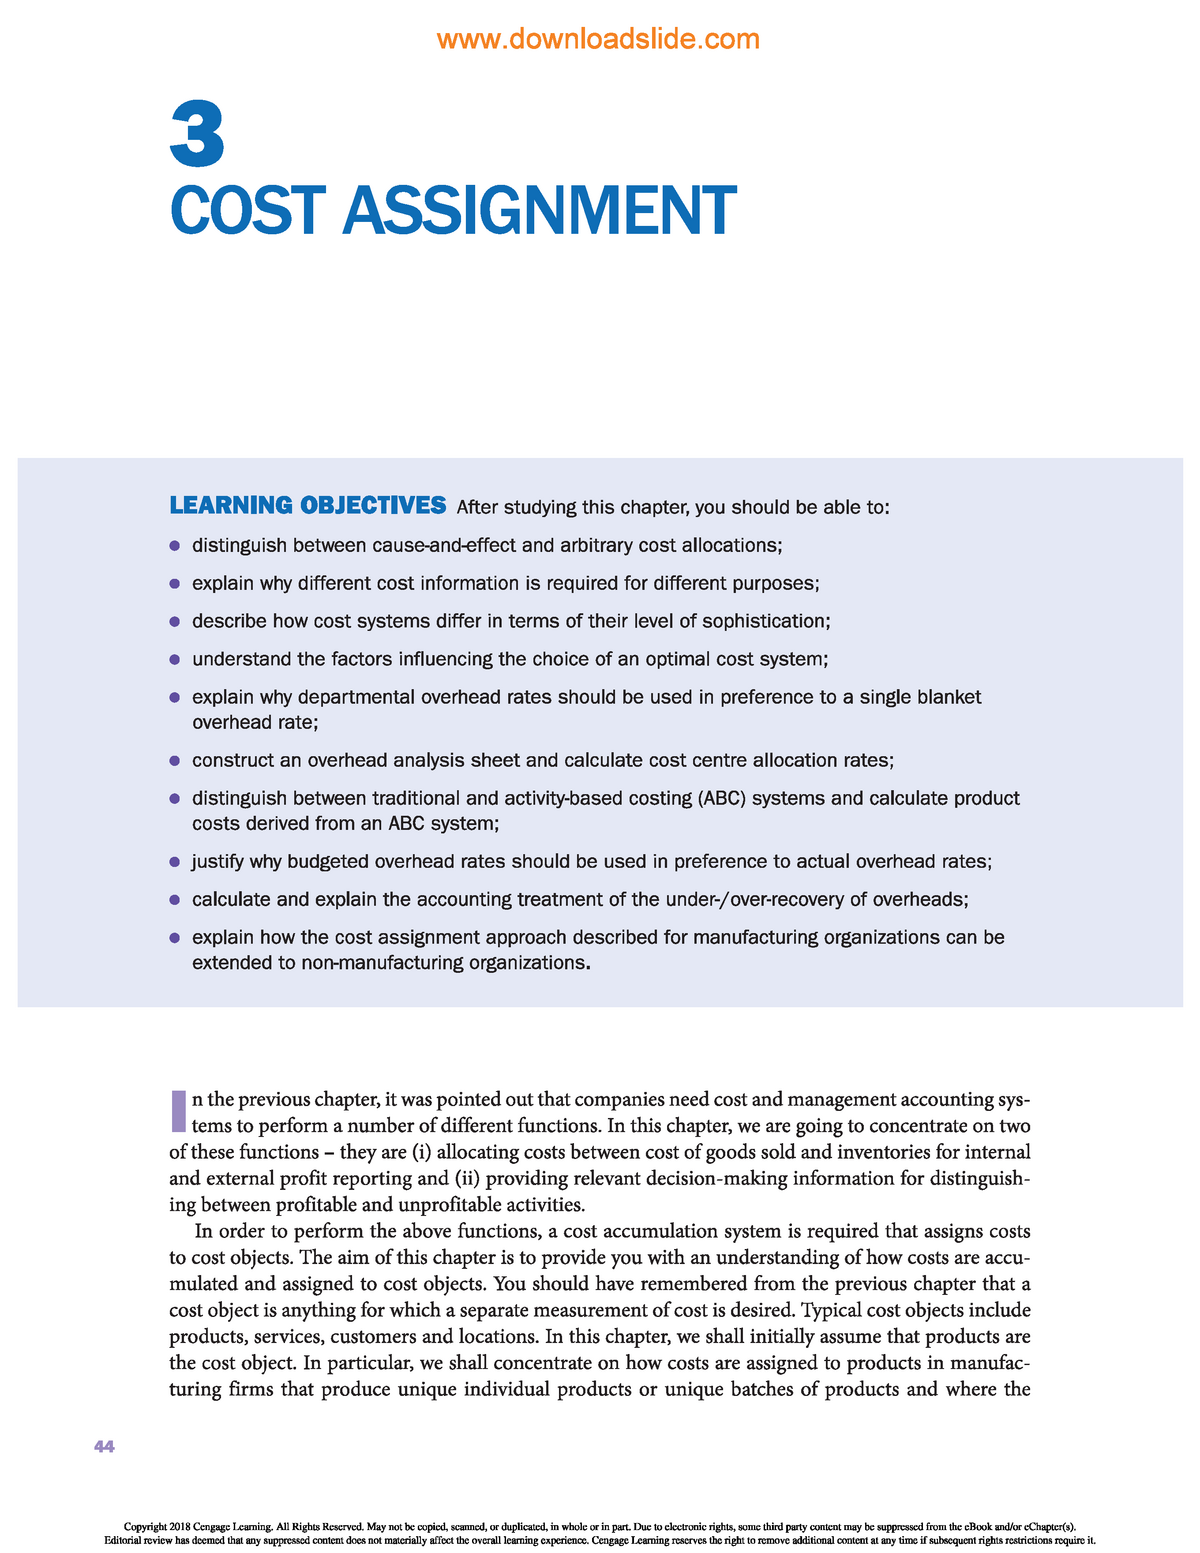 cost assignment purpose